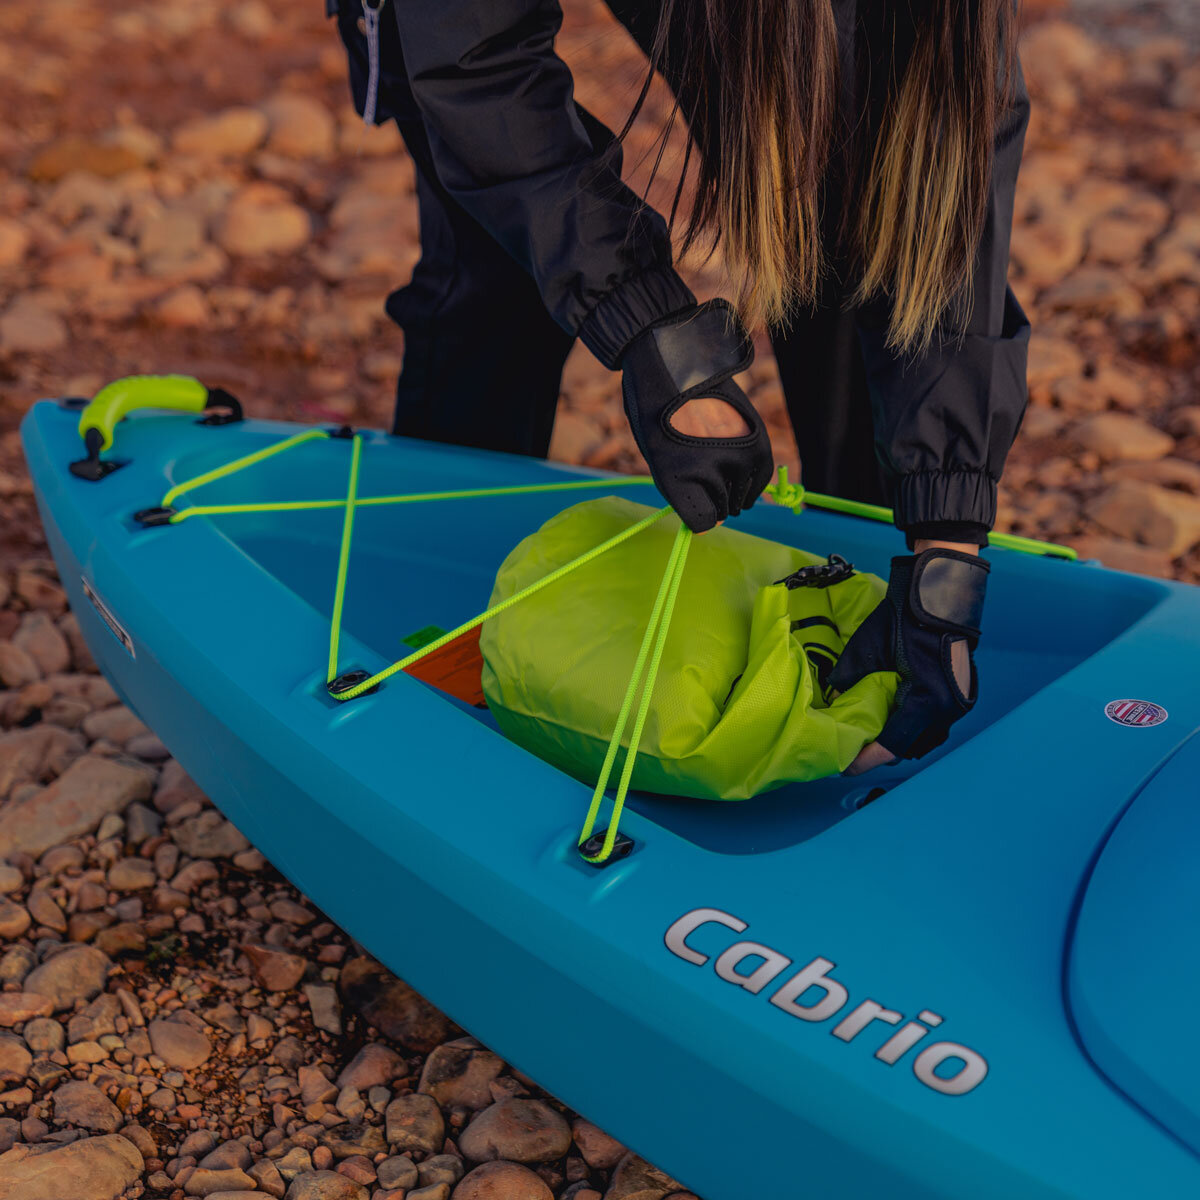 Emotion Cabrio 11ft (3.35m) Hybrid Kayak with Paddle